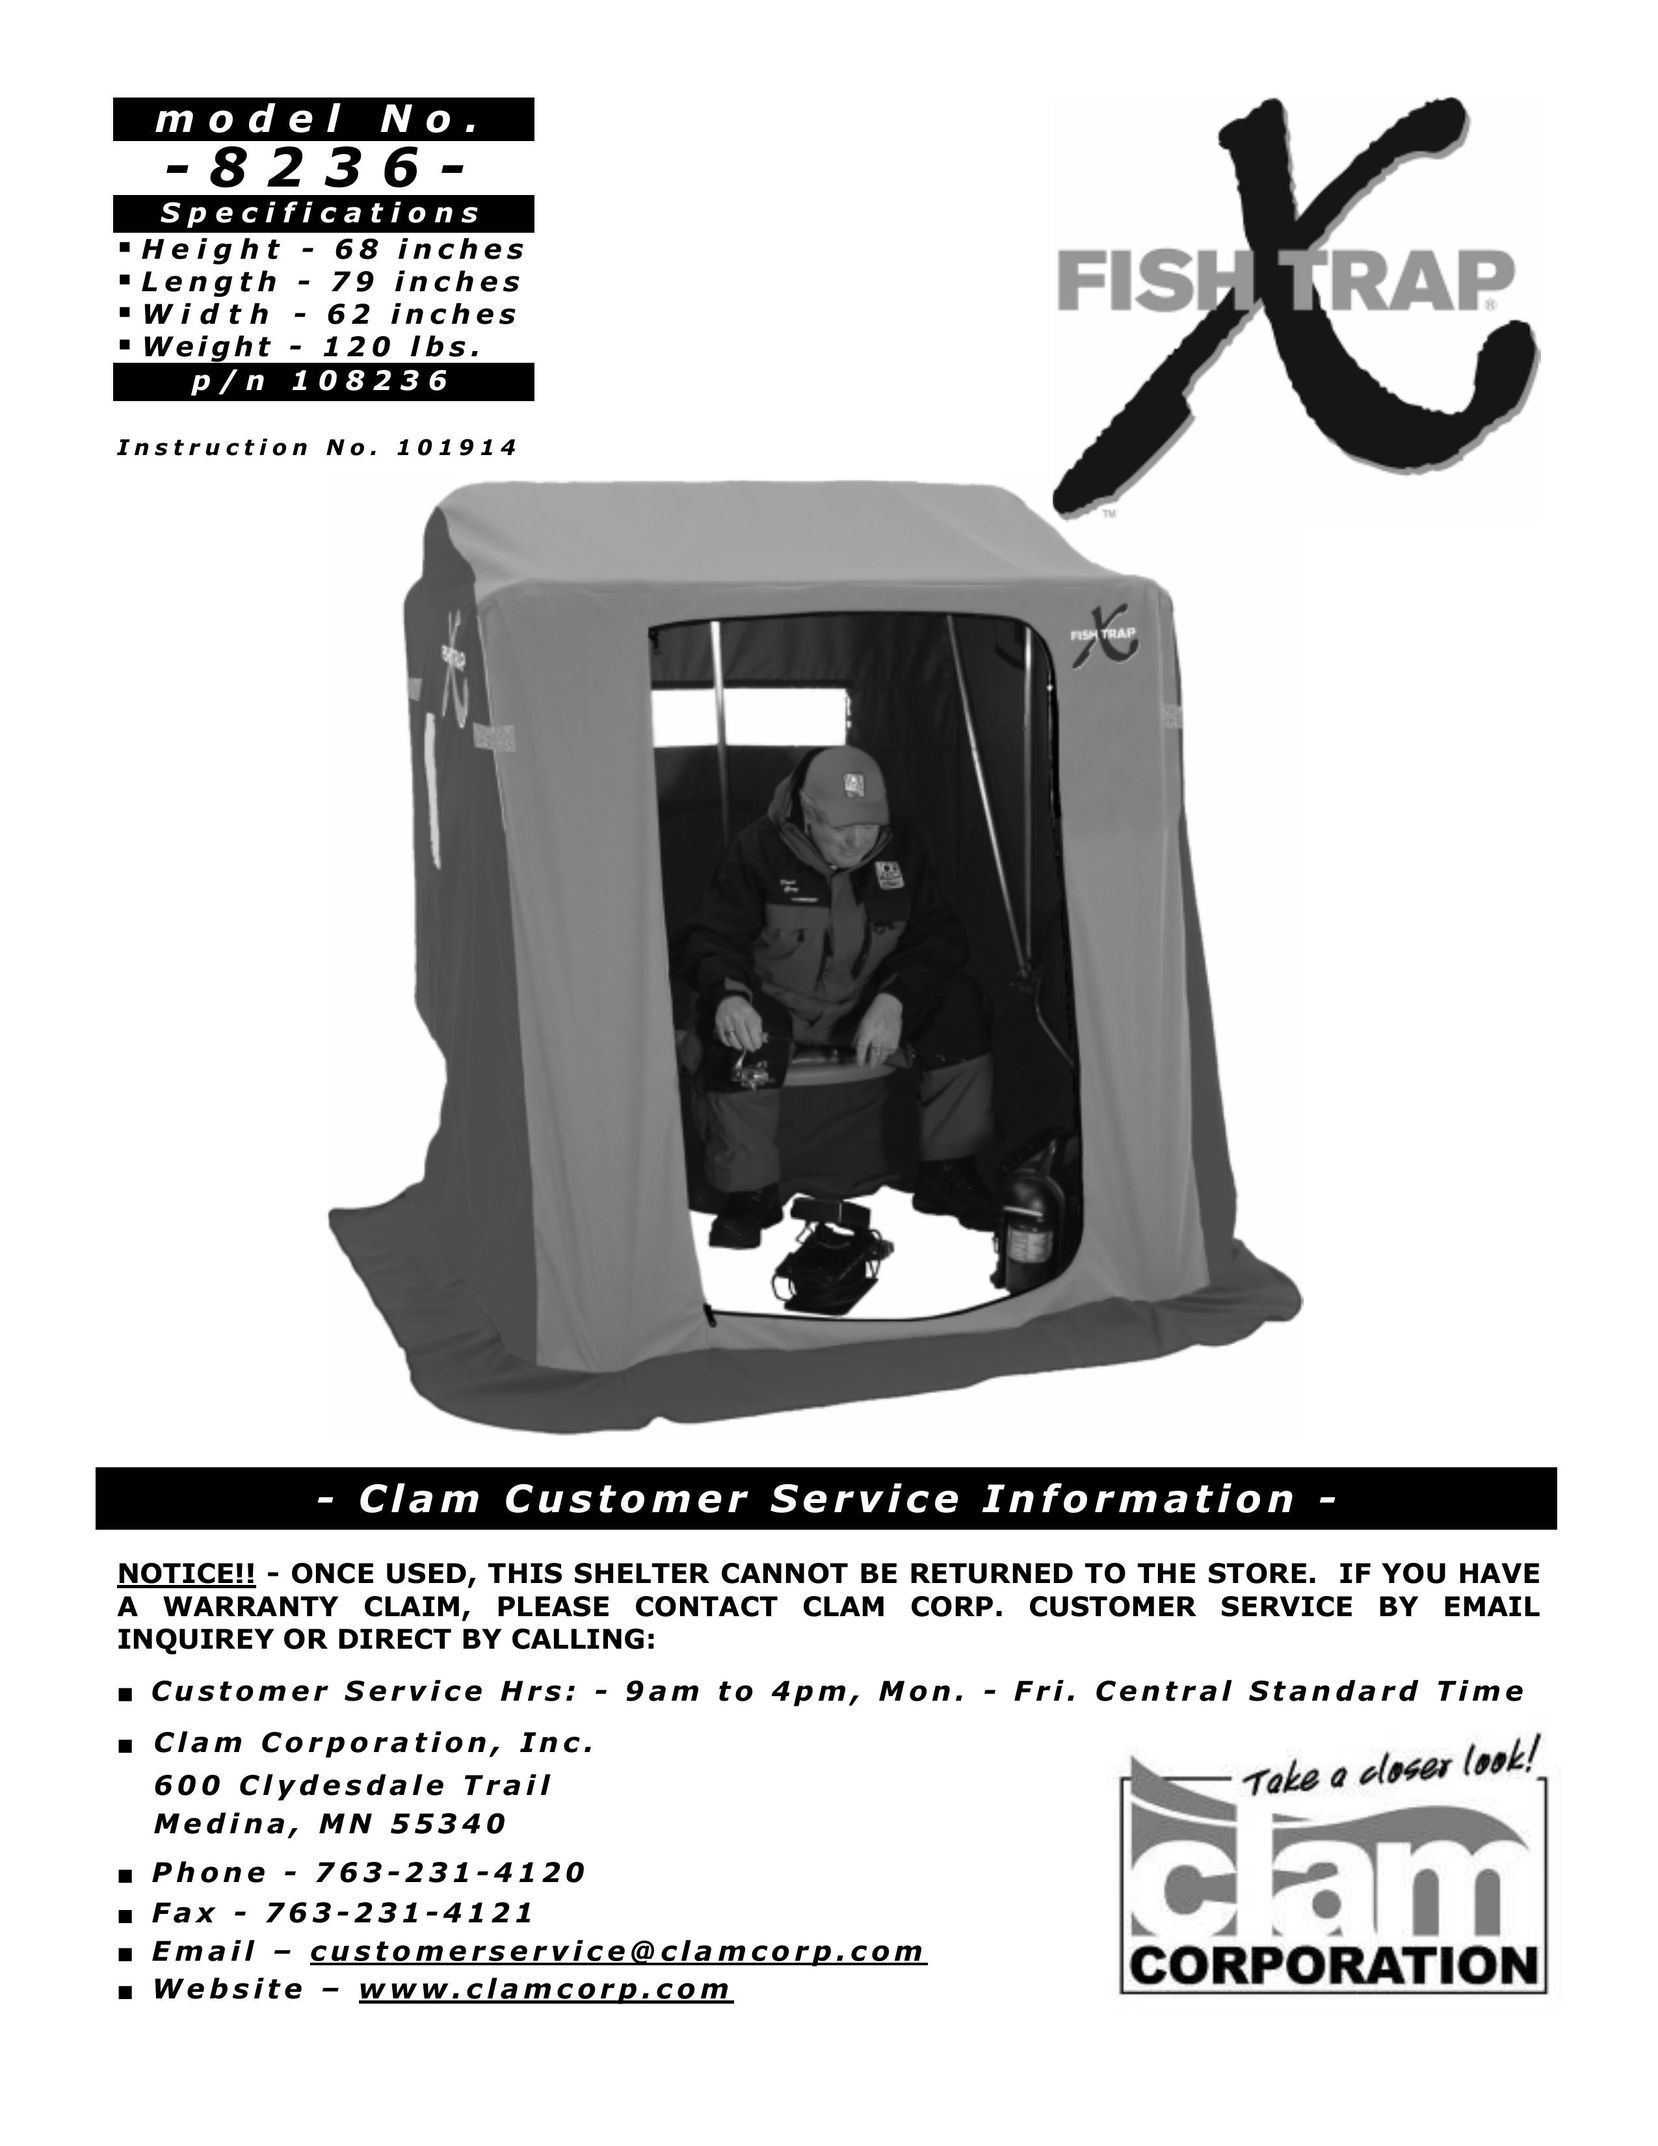 Clam Corp 8236 Camping Equipment User Manual